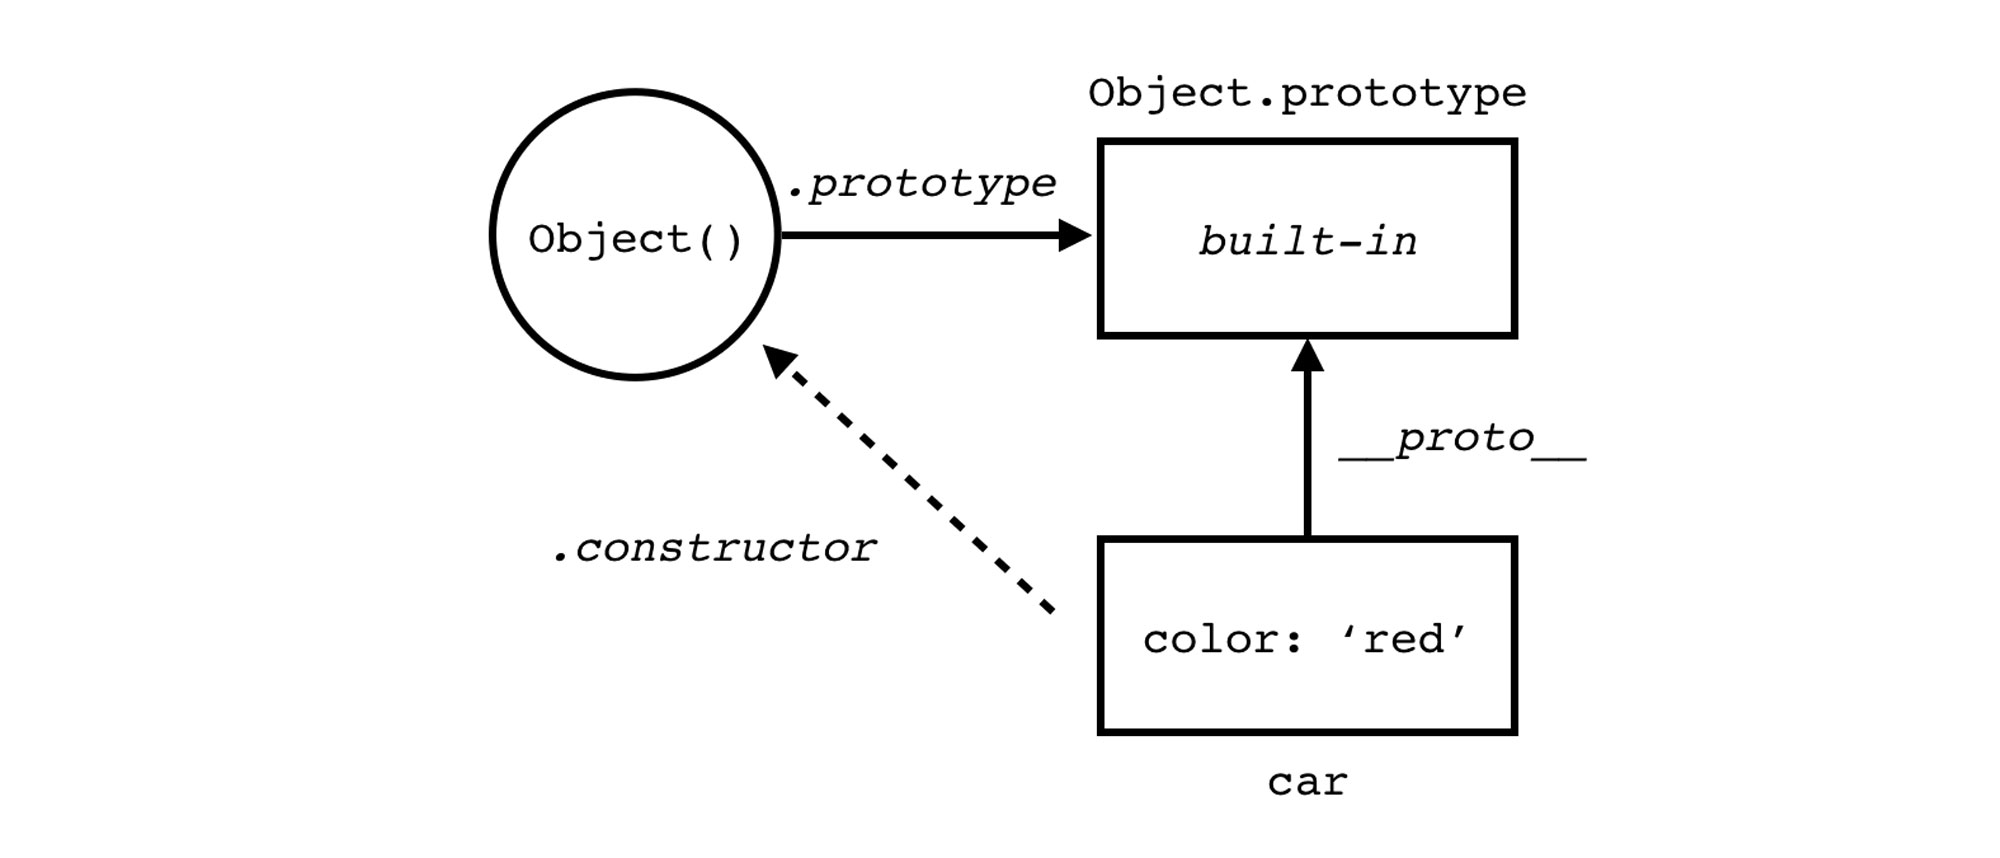 Object prototypes in Javascript